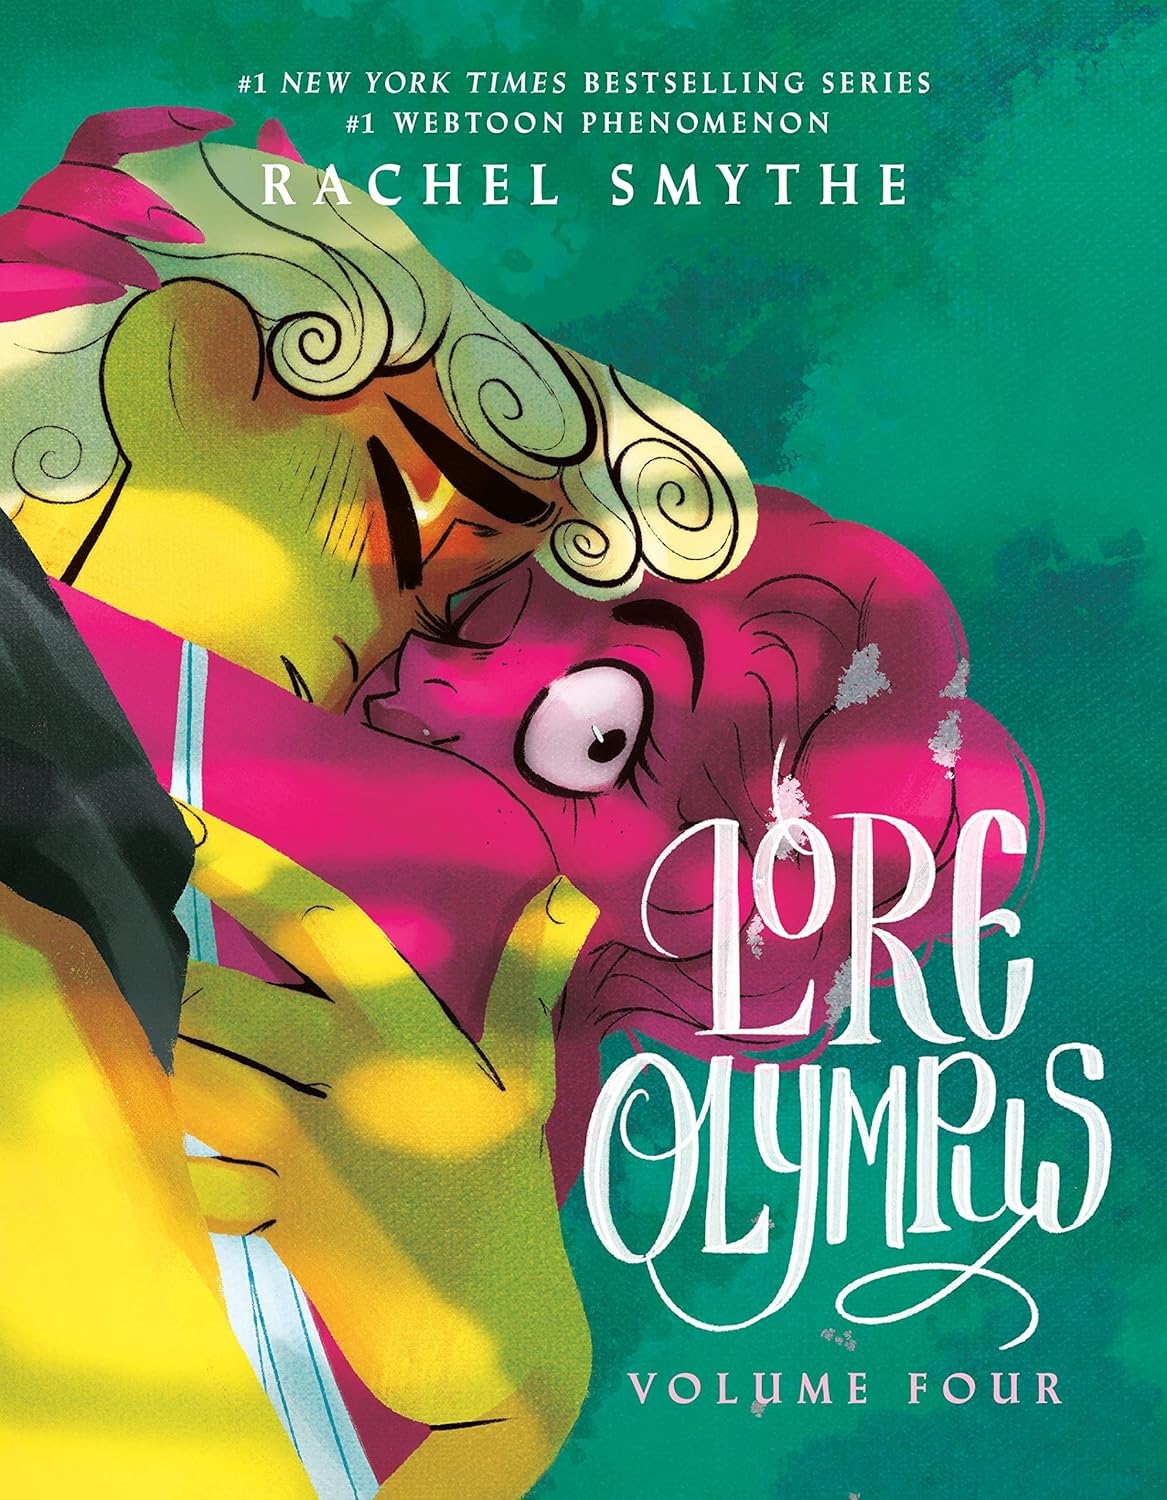 Lore Olympus Volume 4